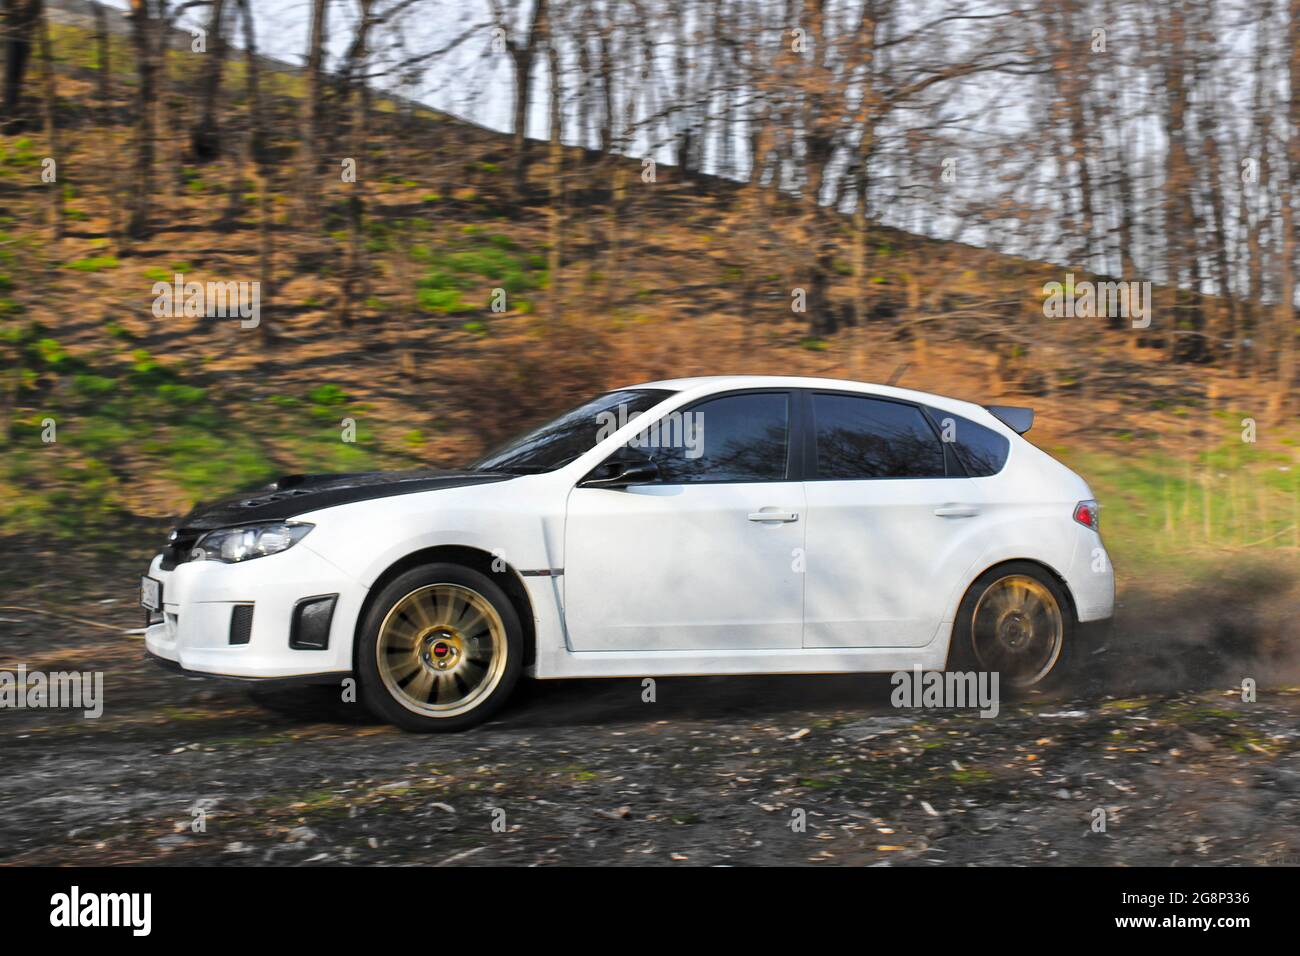 Kiev, Ukraine - March 25, 2015: Subaru Impreza WRX STI in the park. Subaru in motion. Japanese car on nature background Stock Photo